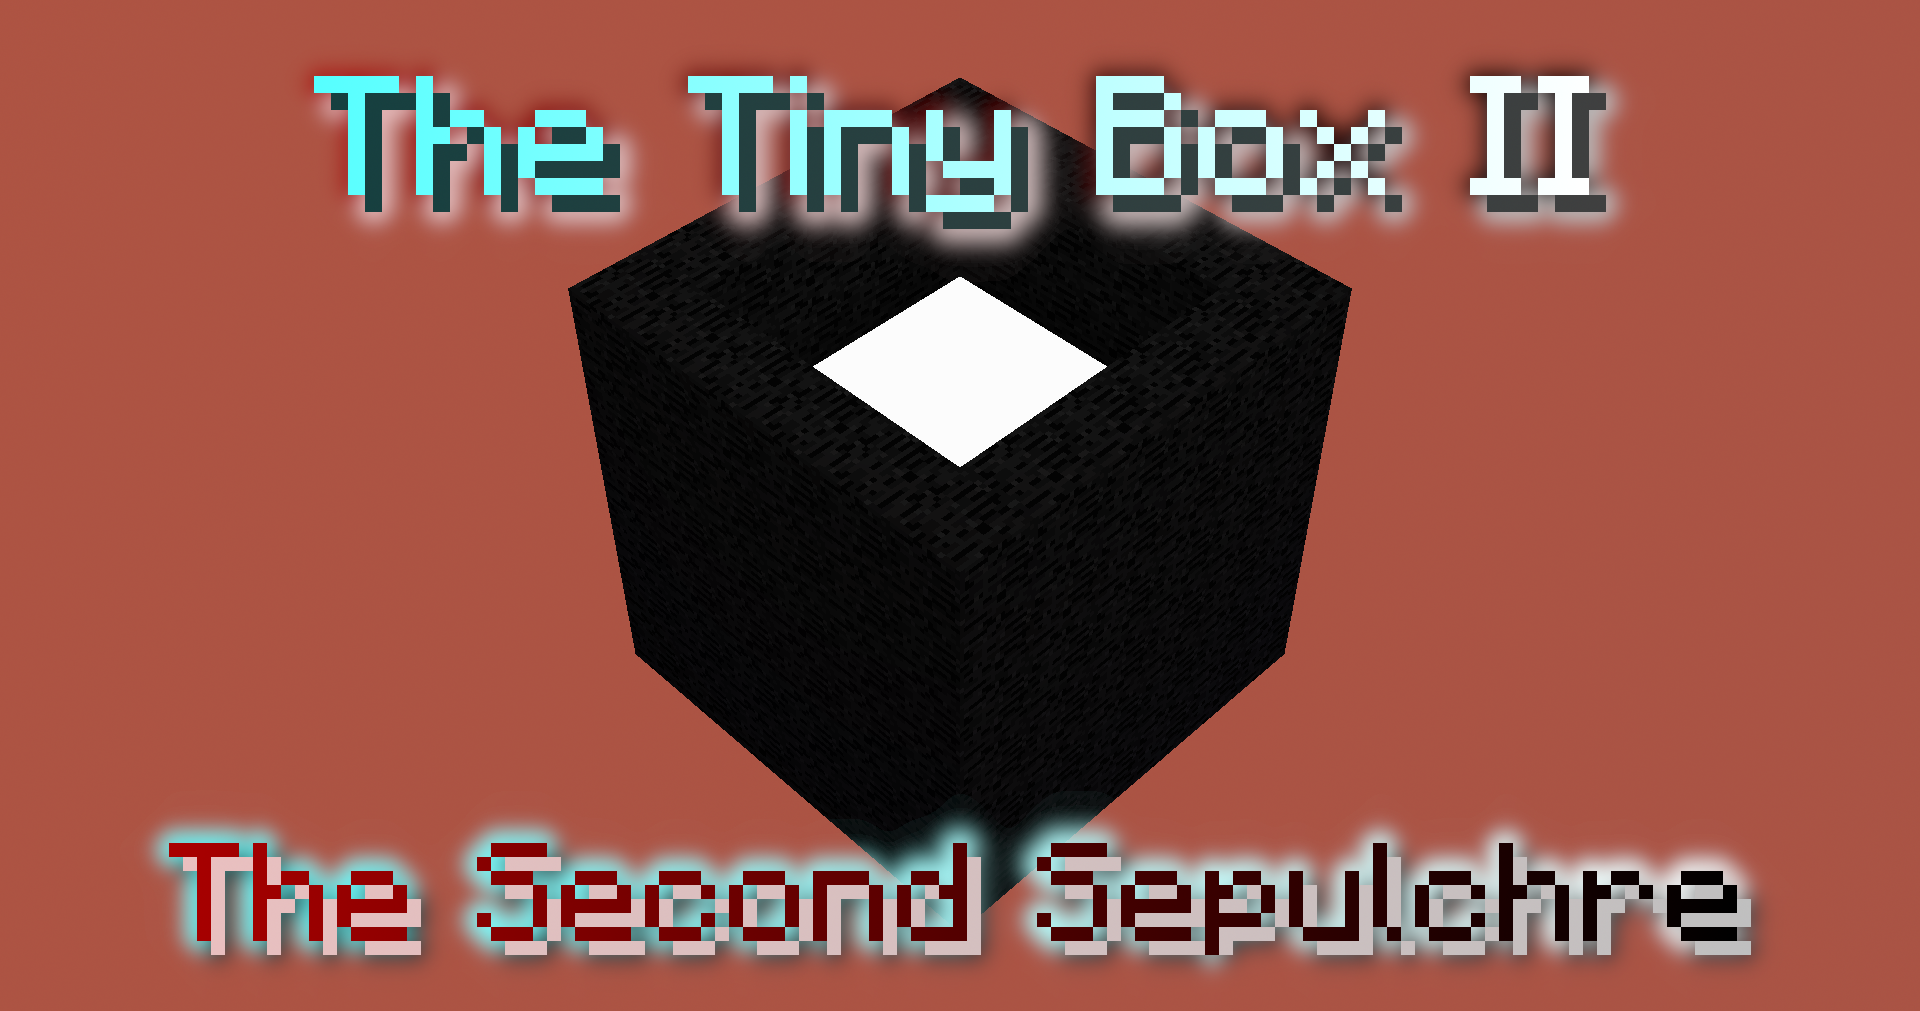 İndir The Tiny Box II - The Second Sepulchre için Minecraft 1.15.2